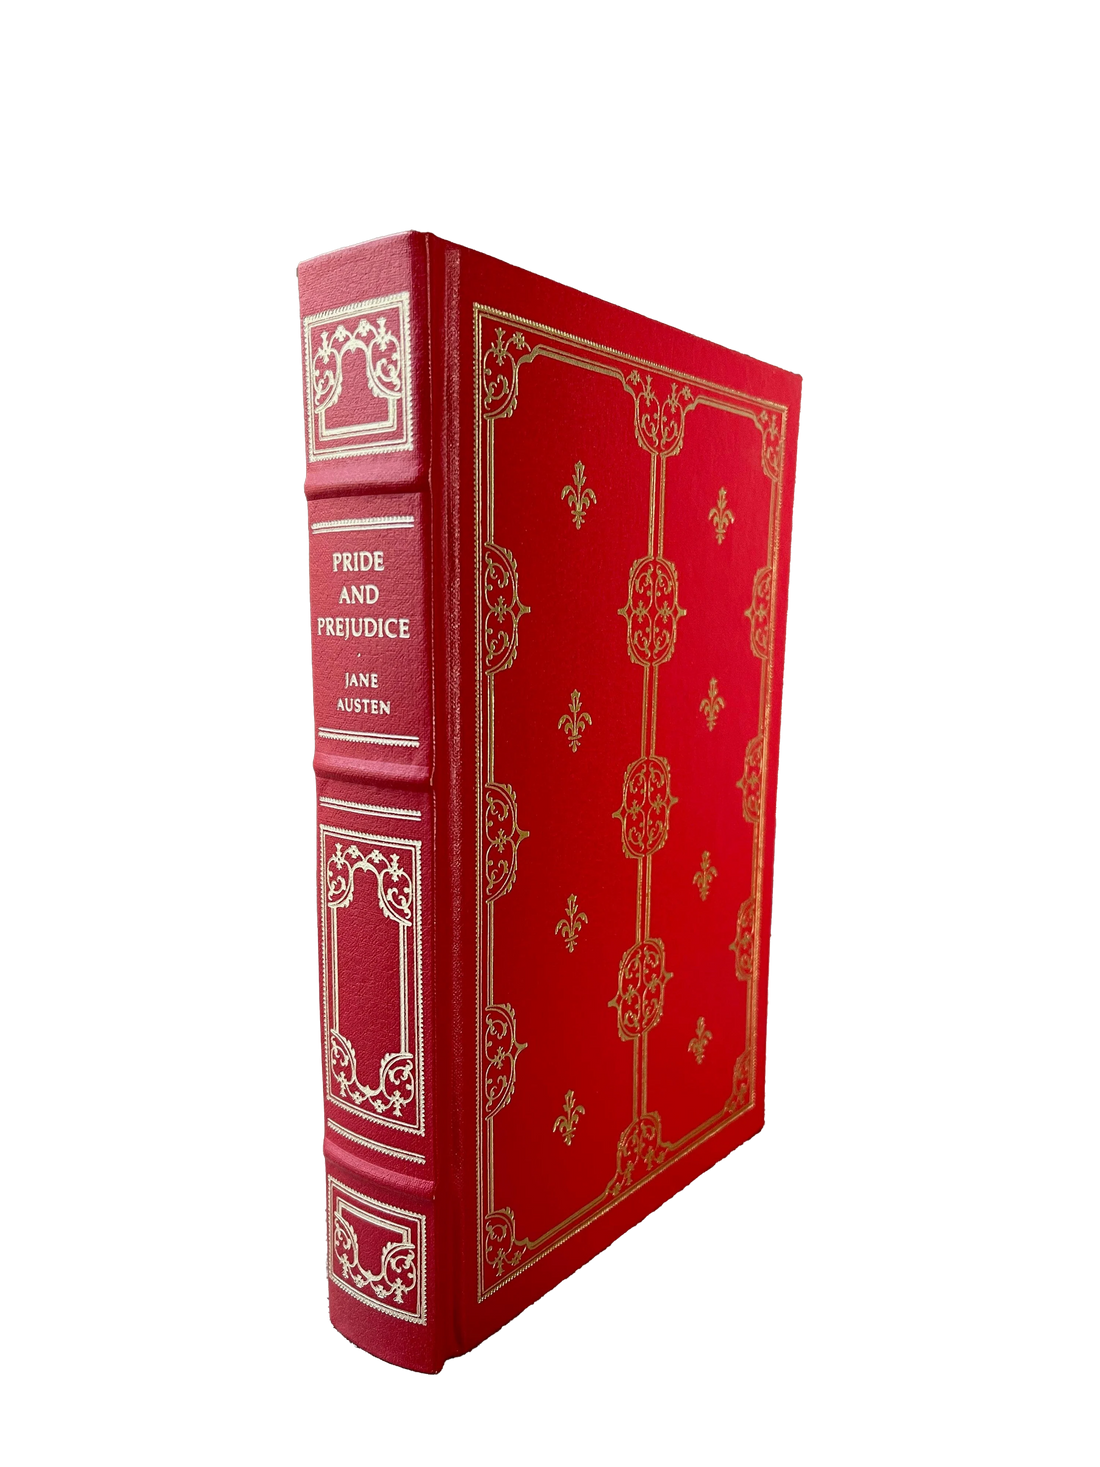 Leather-bound edition of Jane Austen's Pride & Prejudice on display at Kadri Books